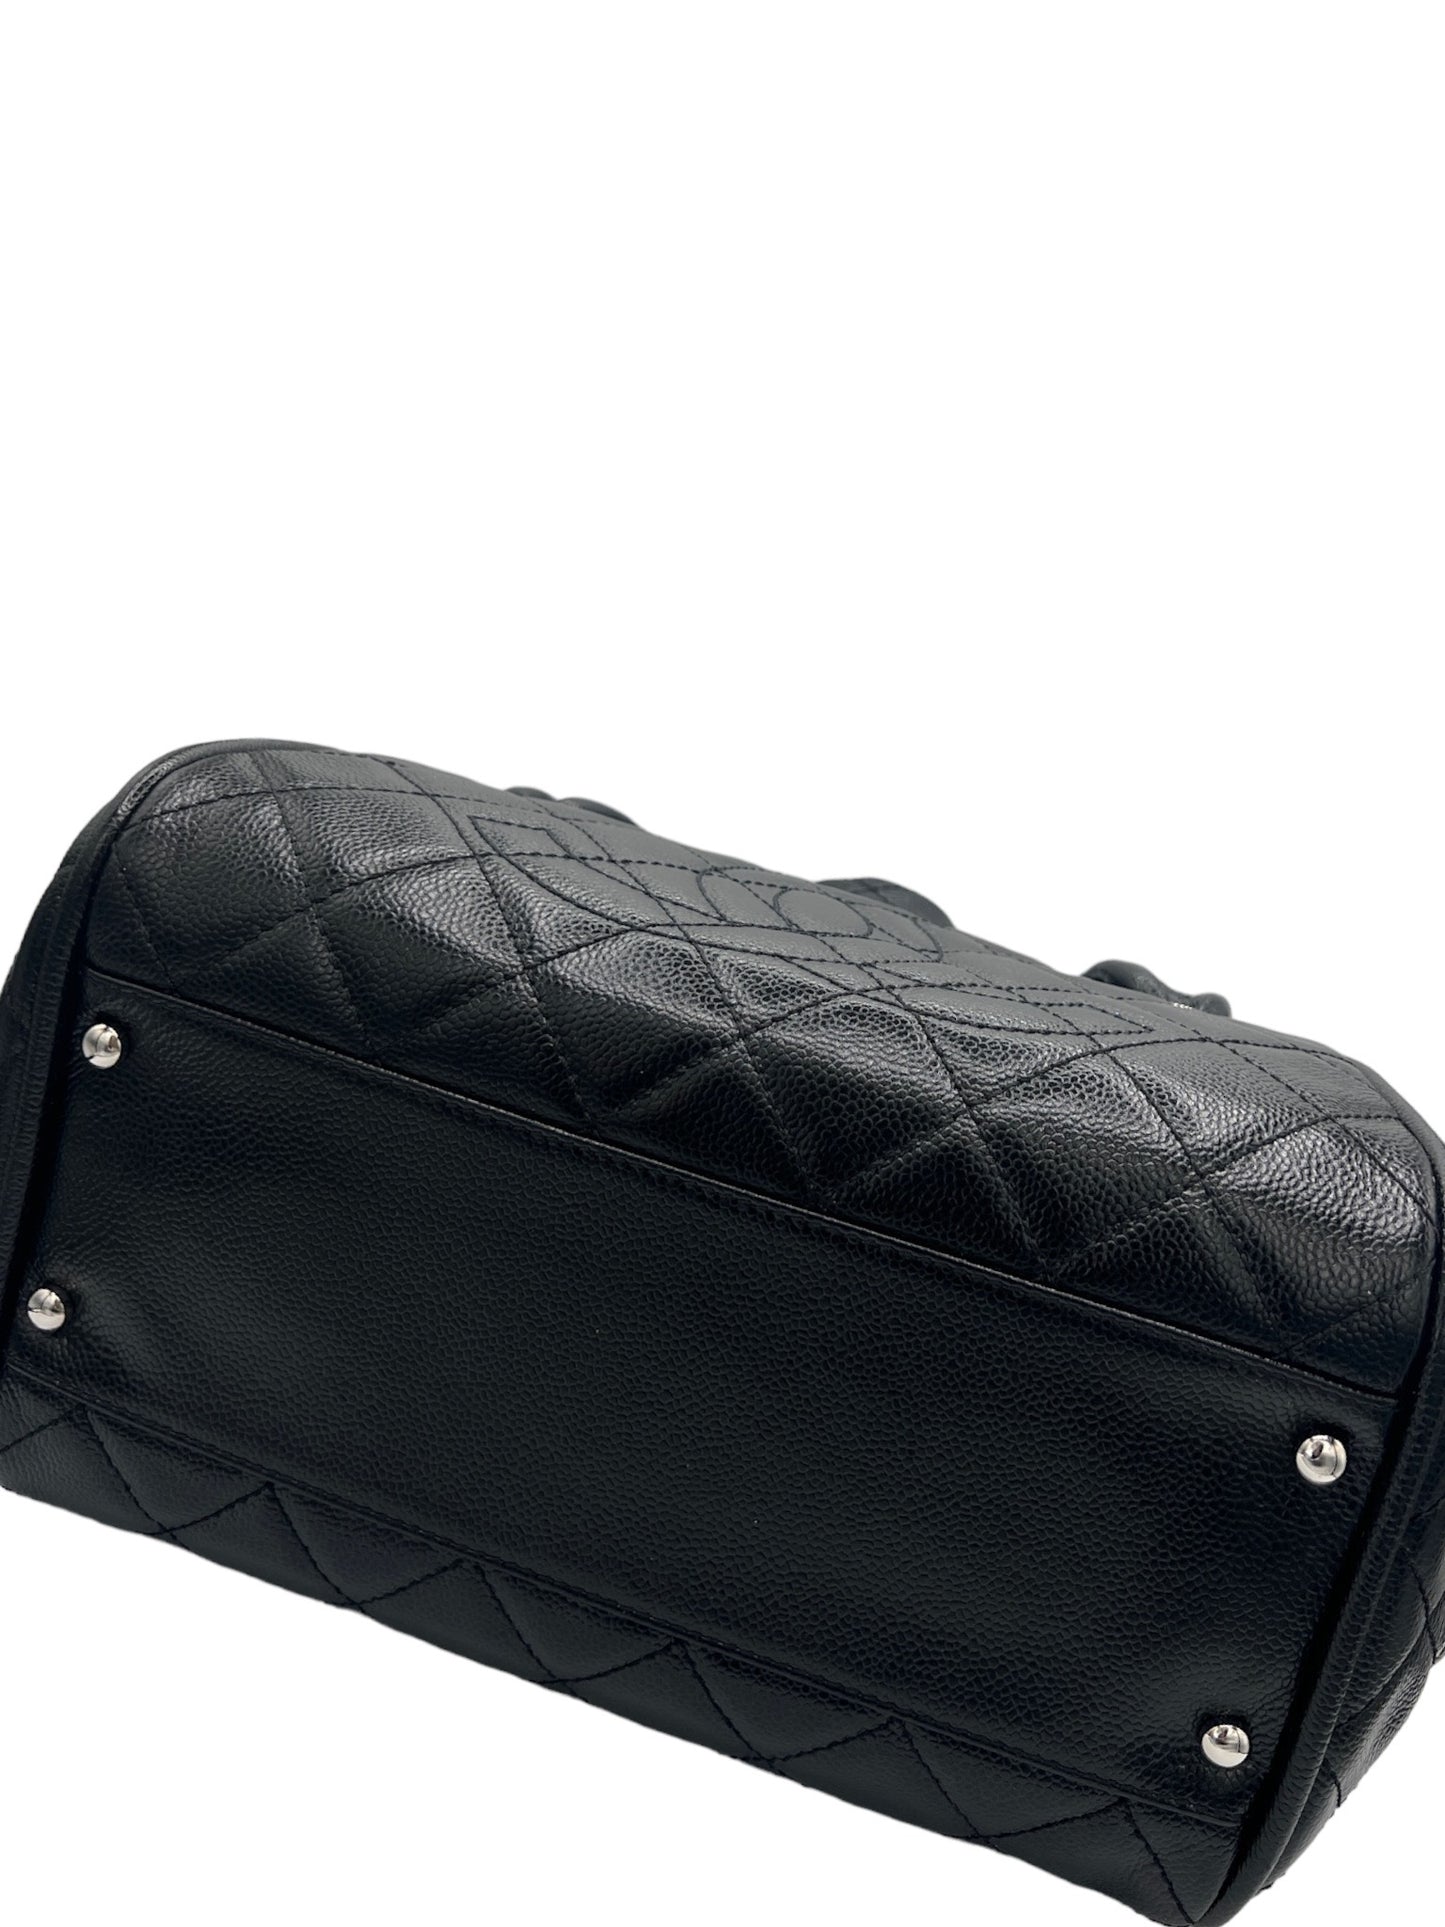 CHANEL - Bowling Bag Black Leather